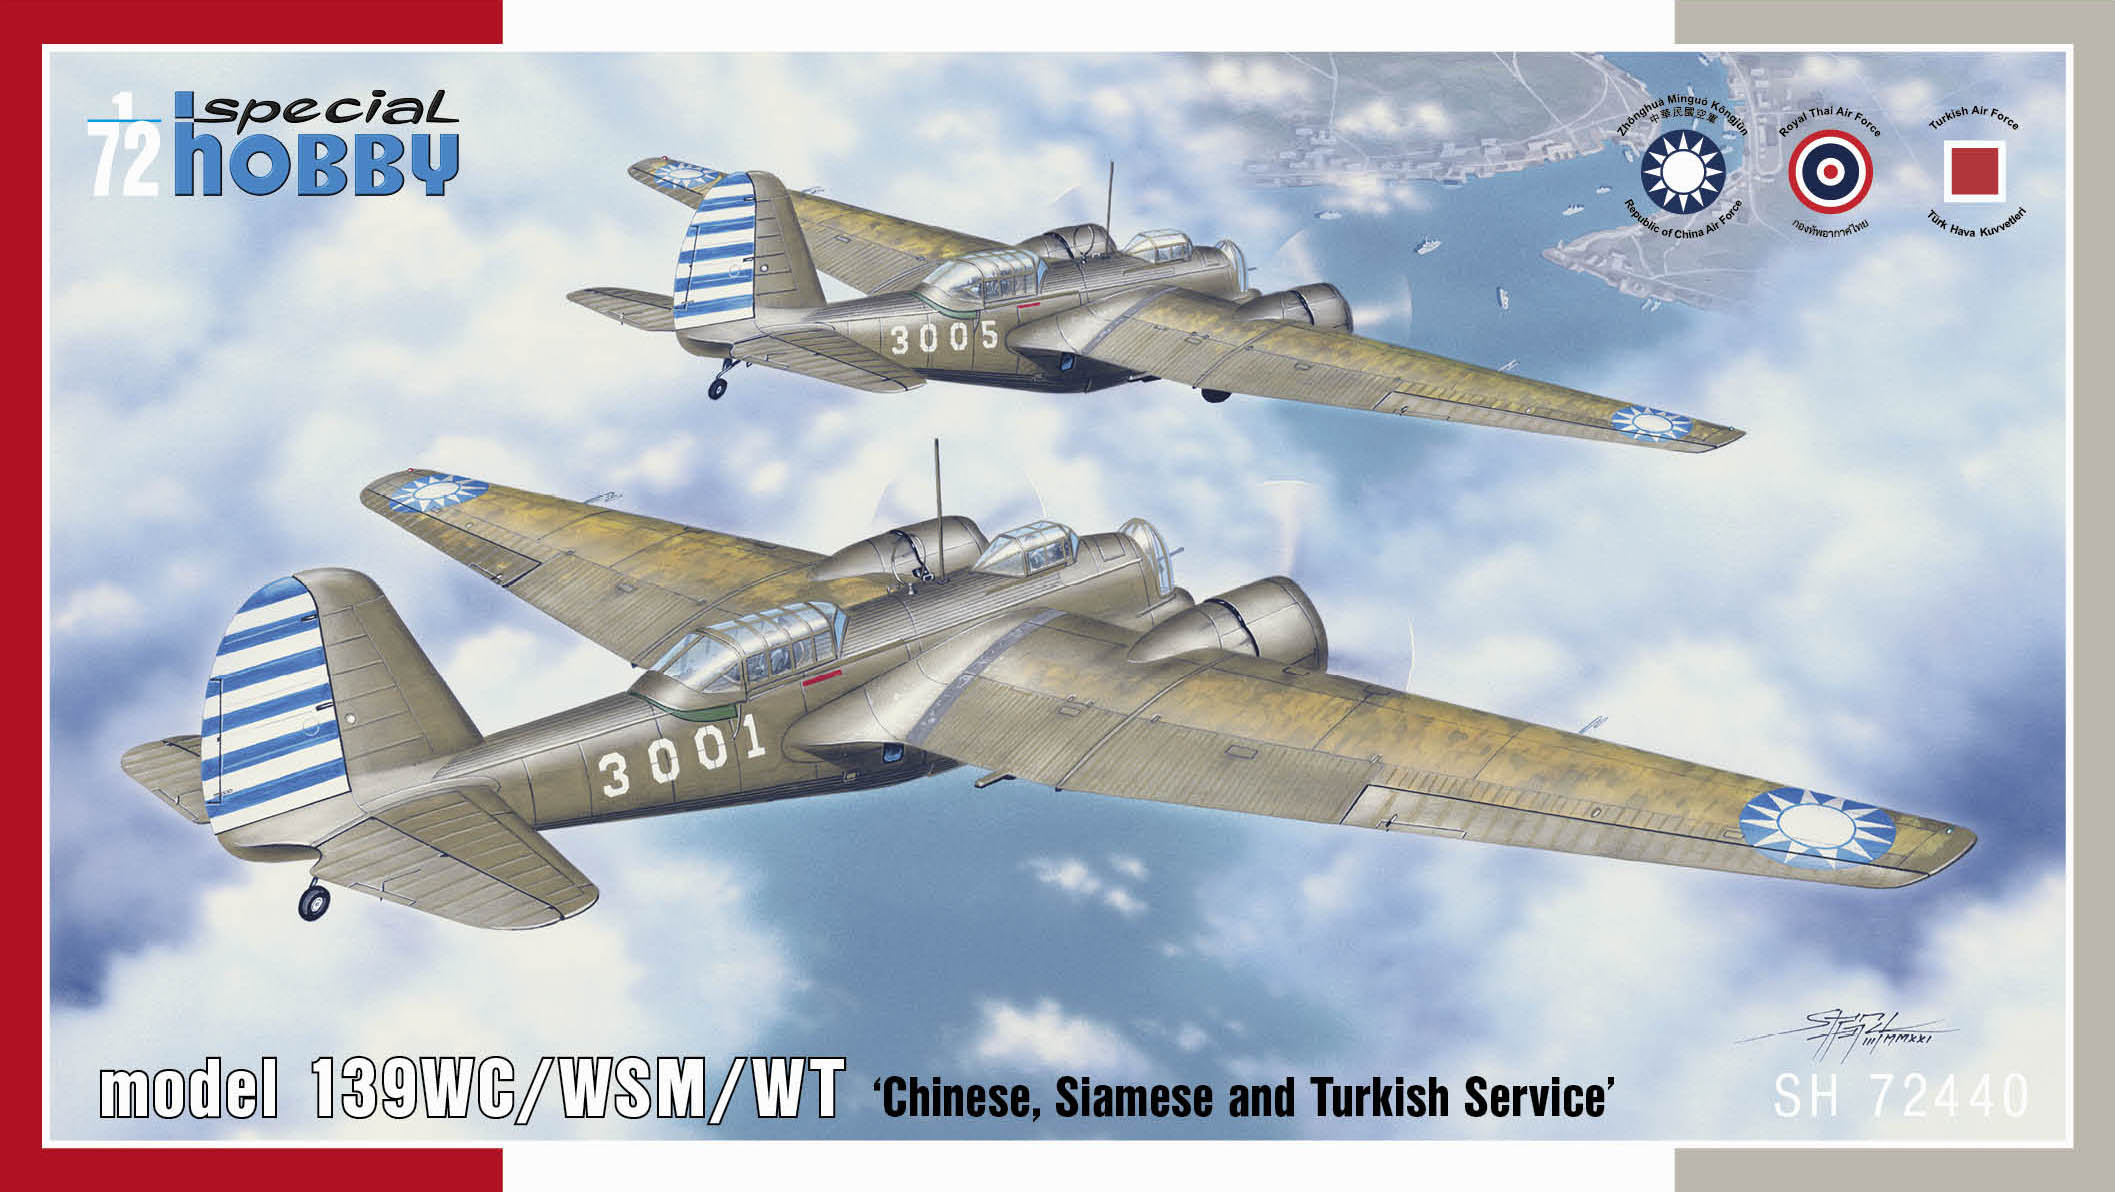 Plastikový model letadla 1/72 Model 139WC/WSM/WT ‘Chinese, Siamese and Turkish Service’ - Special Ho